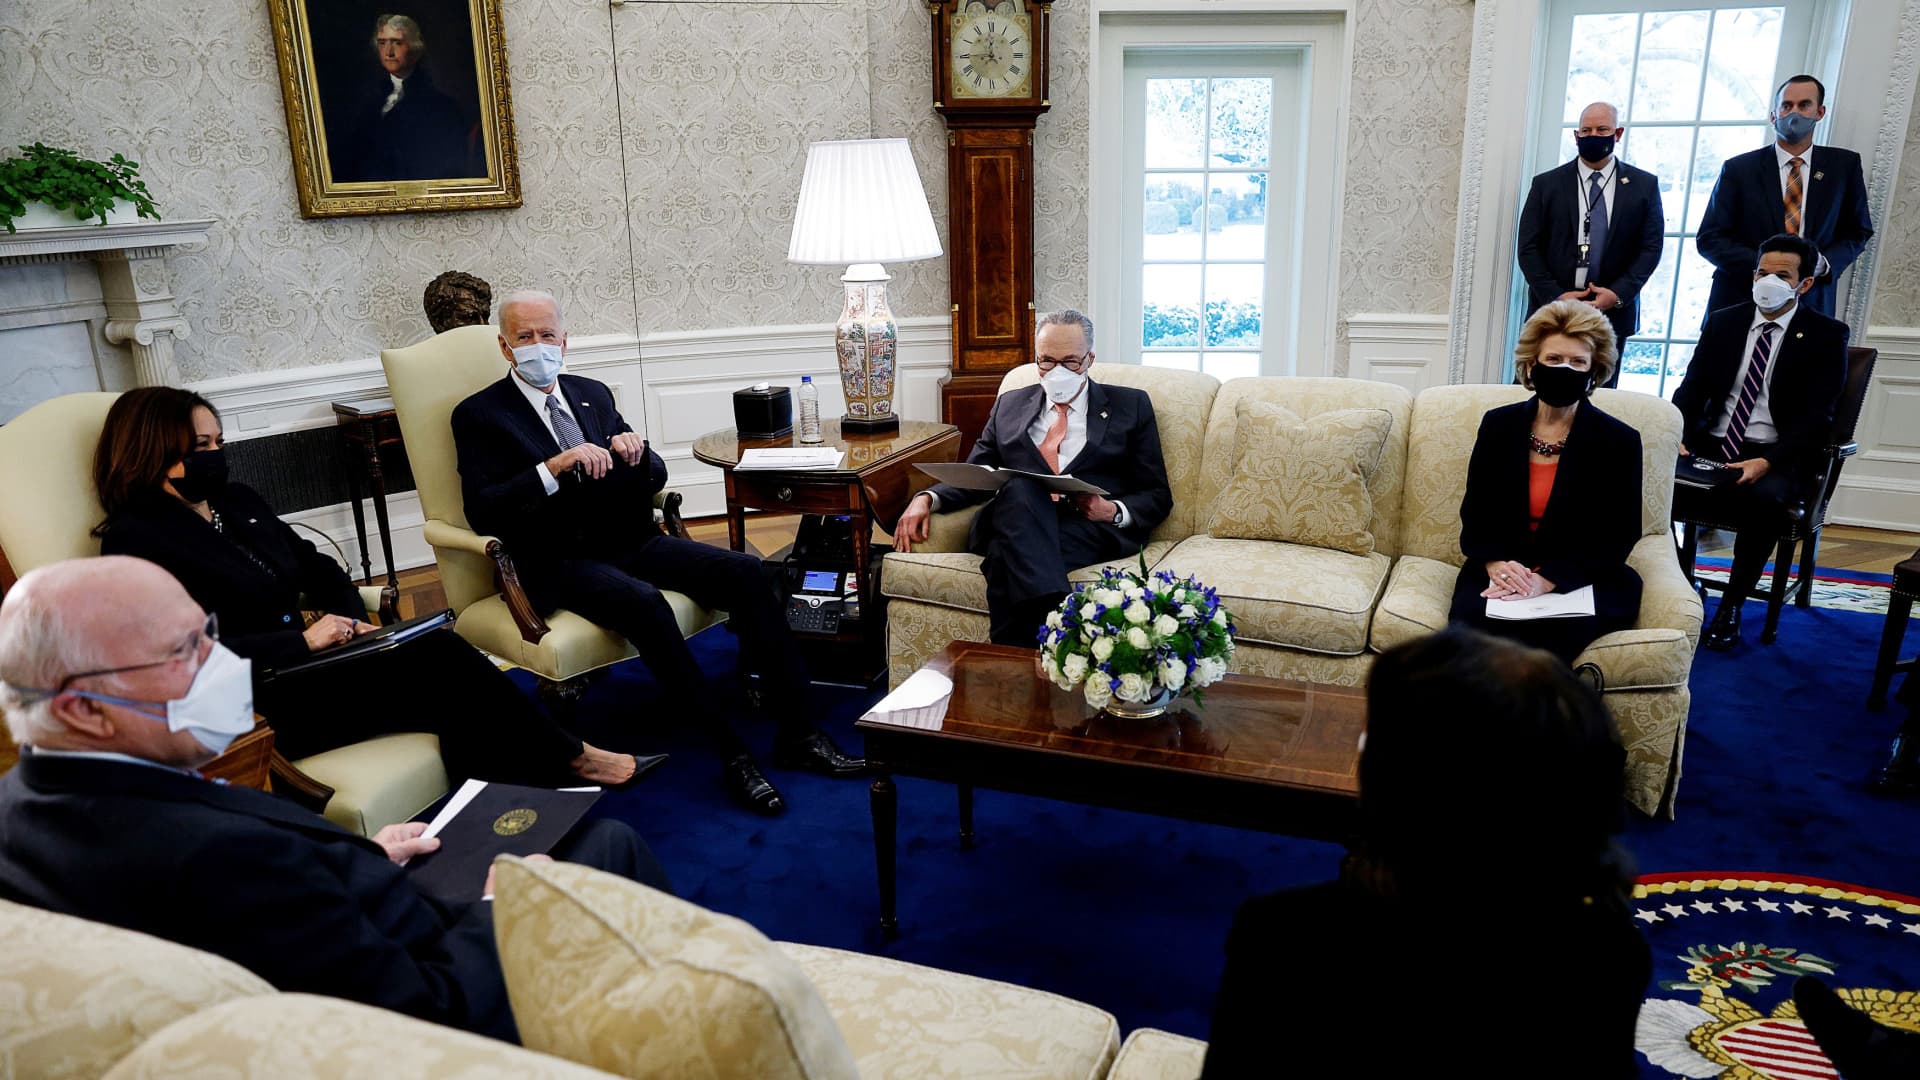 President Joe Biden and Vice President Kamala Harris discuss coronavirus aid legislation with Democratic senators during a meeting in the Oval Office at the White House in Washington, U.S., February 3, 2021.